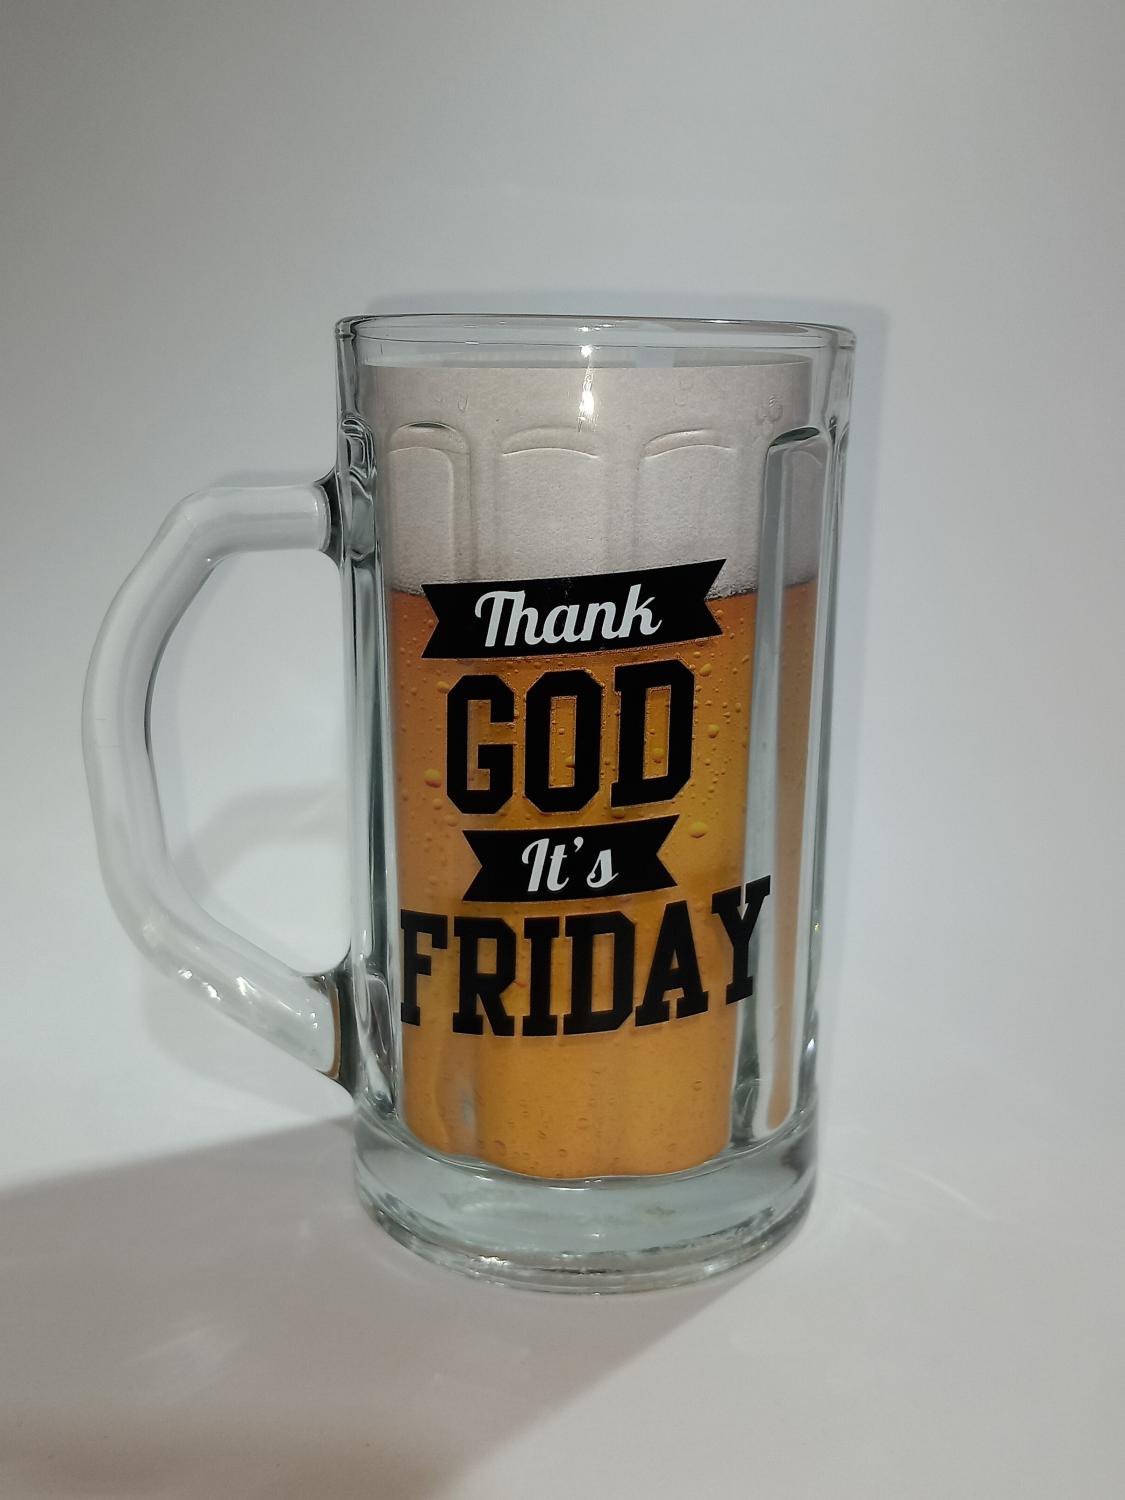 Thank God it is Friday - mug